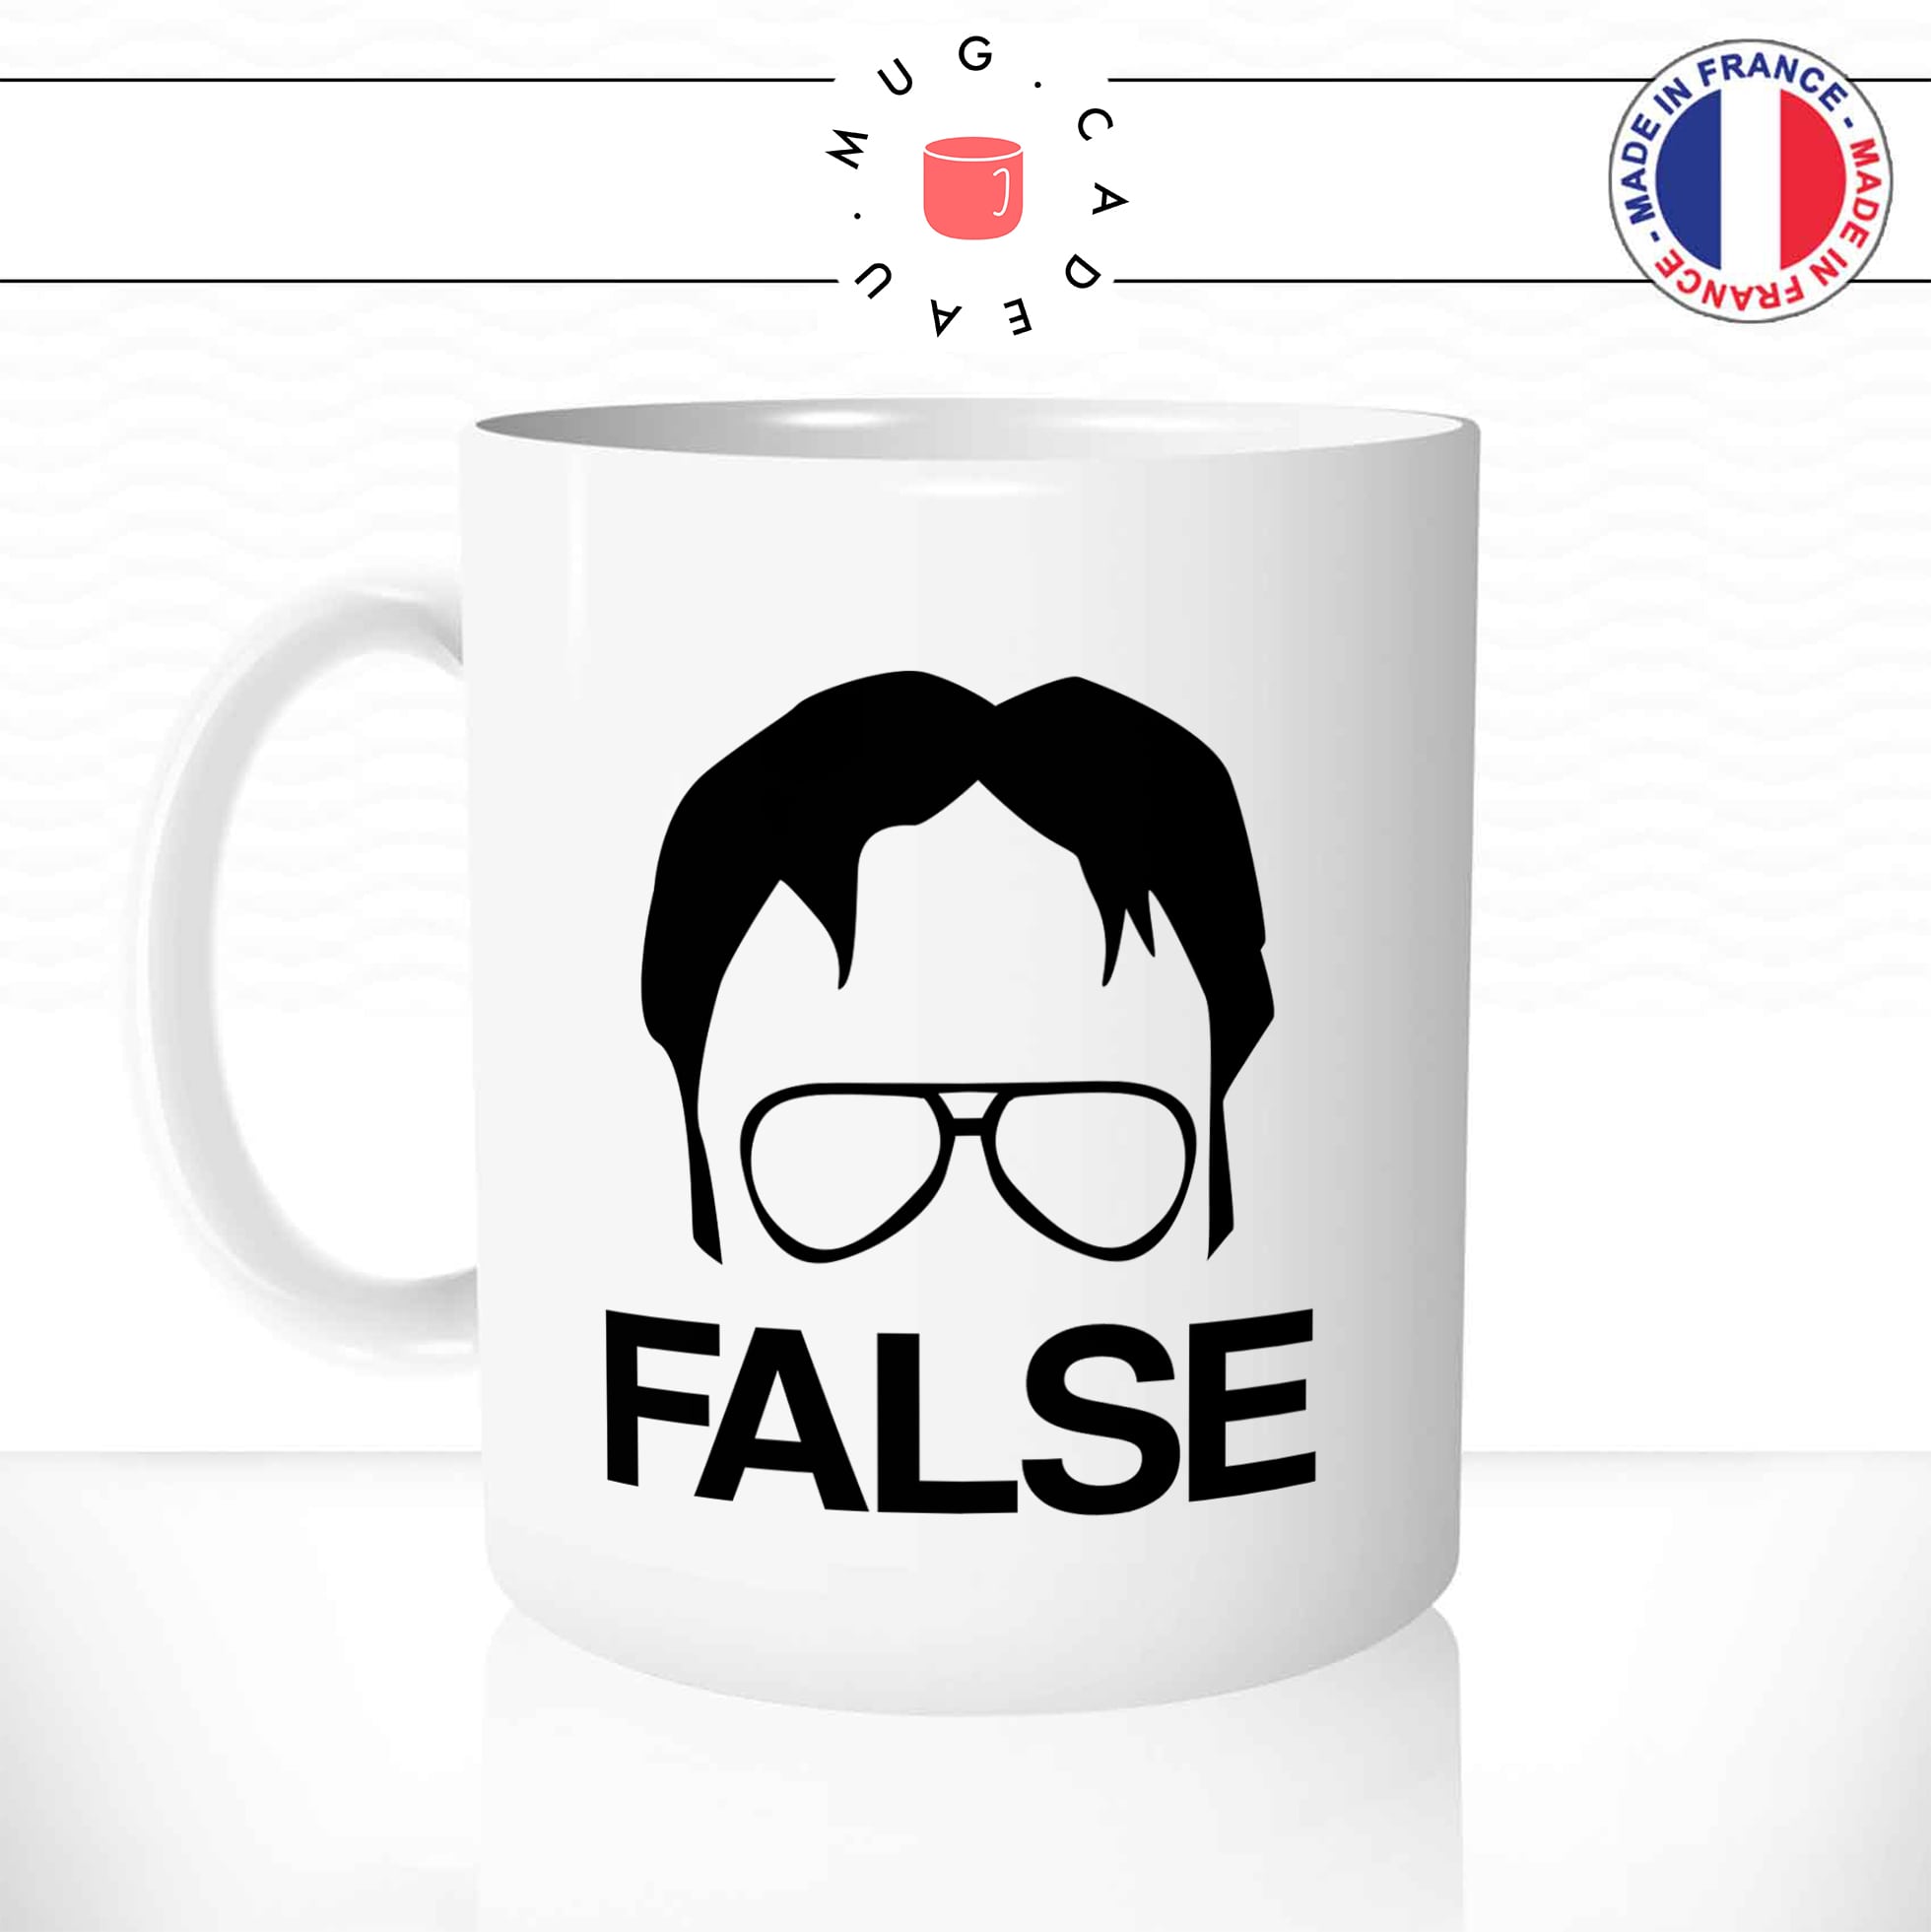 mug-tasse-the-office-serie-dwight-false-faux-bureau-humour-café-thé-idée-cadeau-original-personnalisable-min